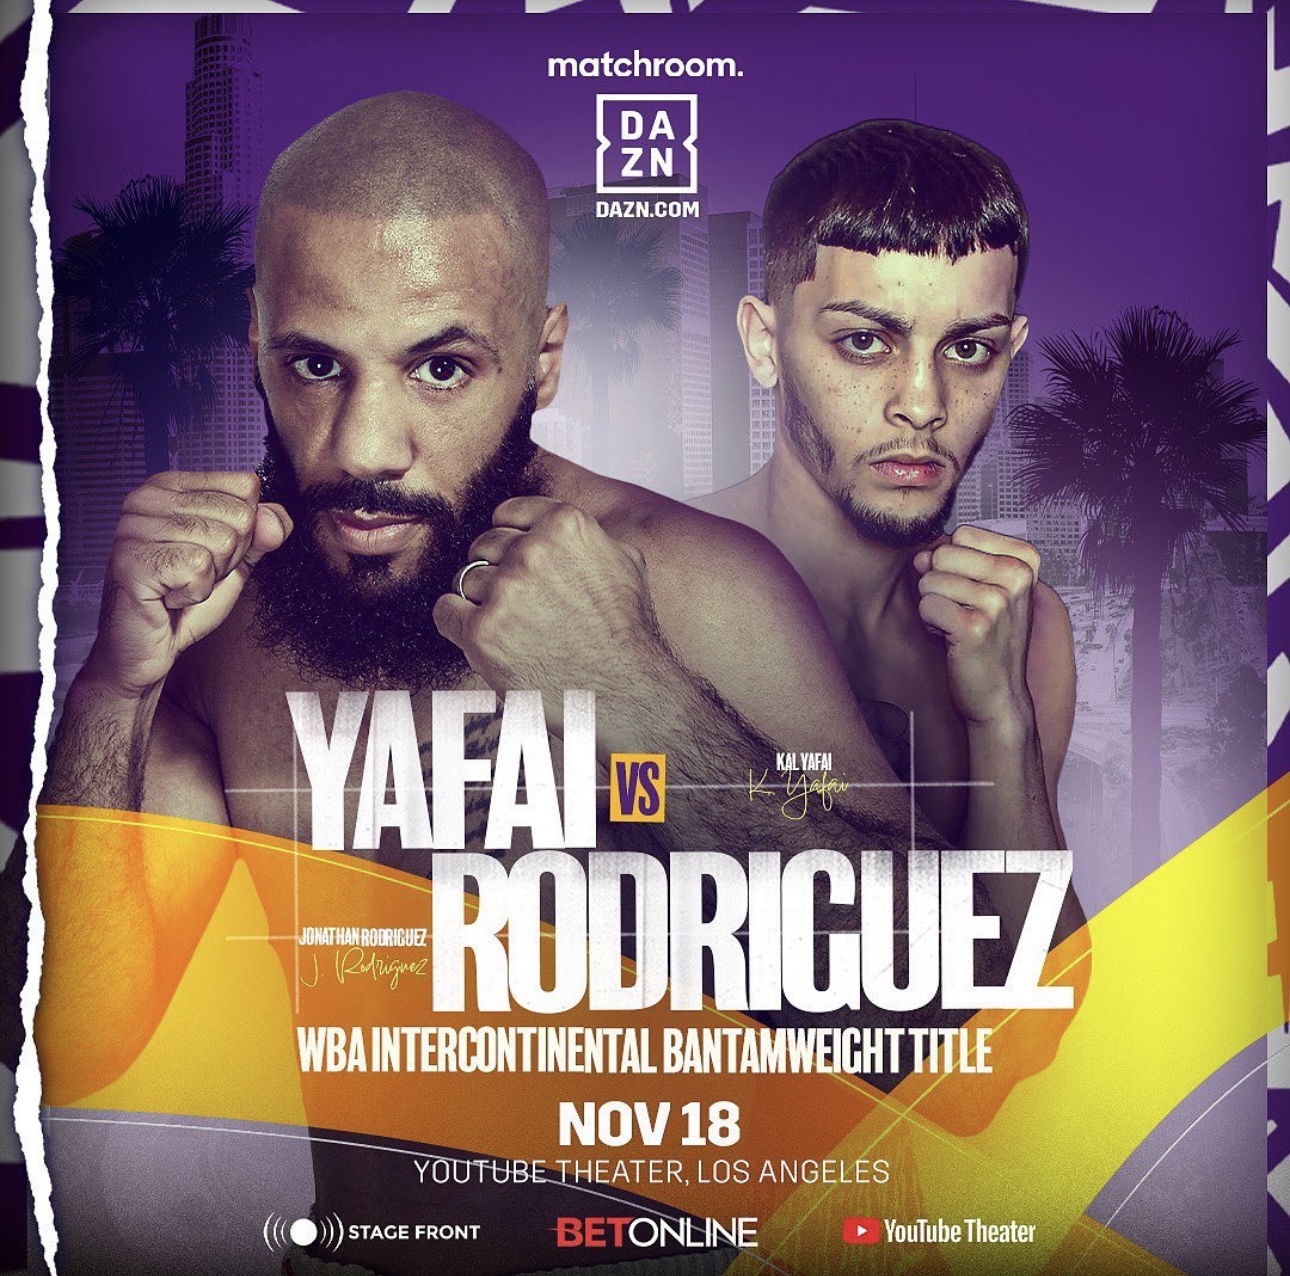 Yafai-Rodriguez will challenge for the WBA regional title